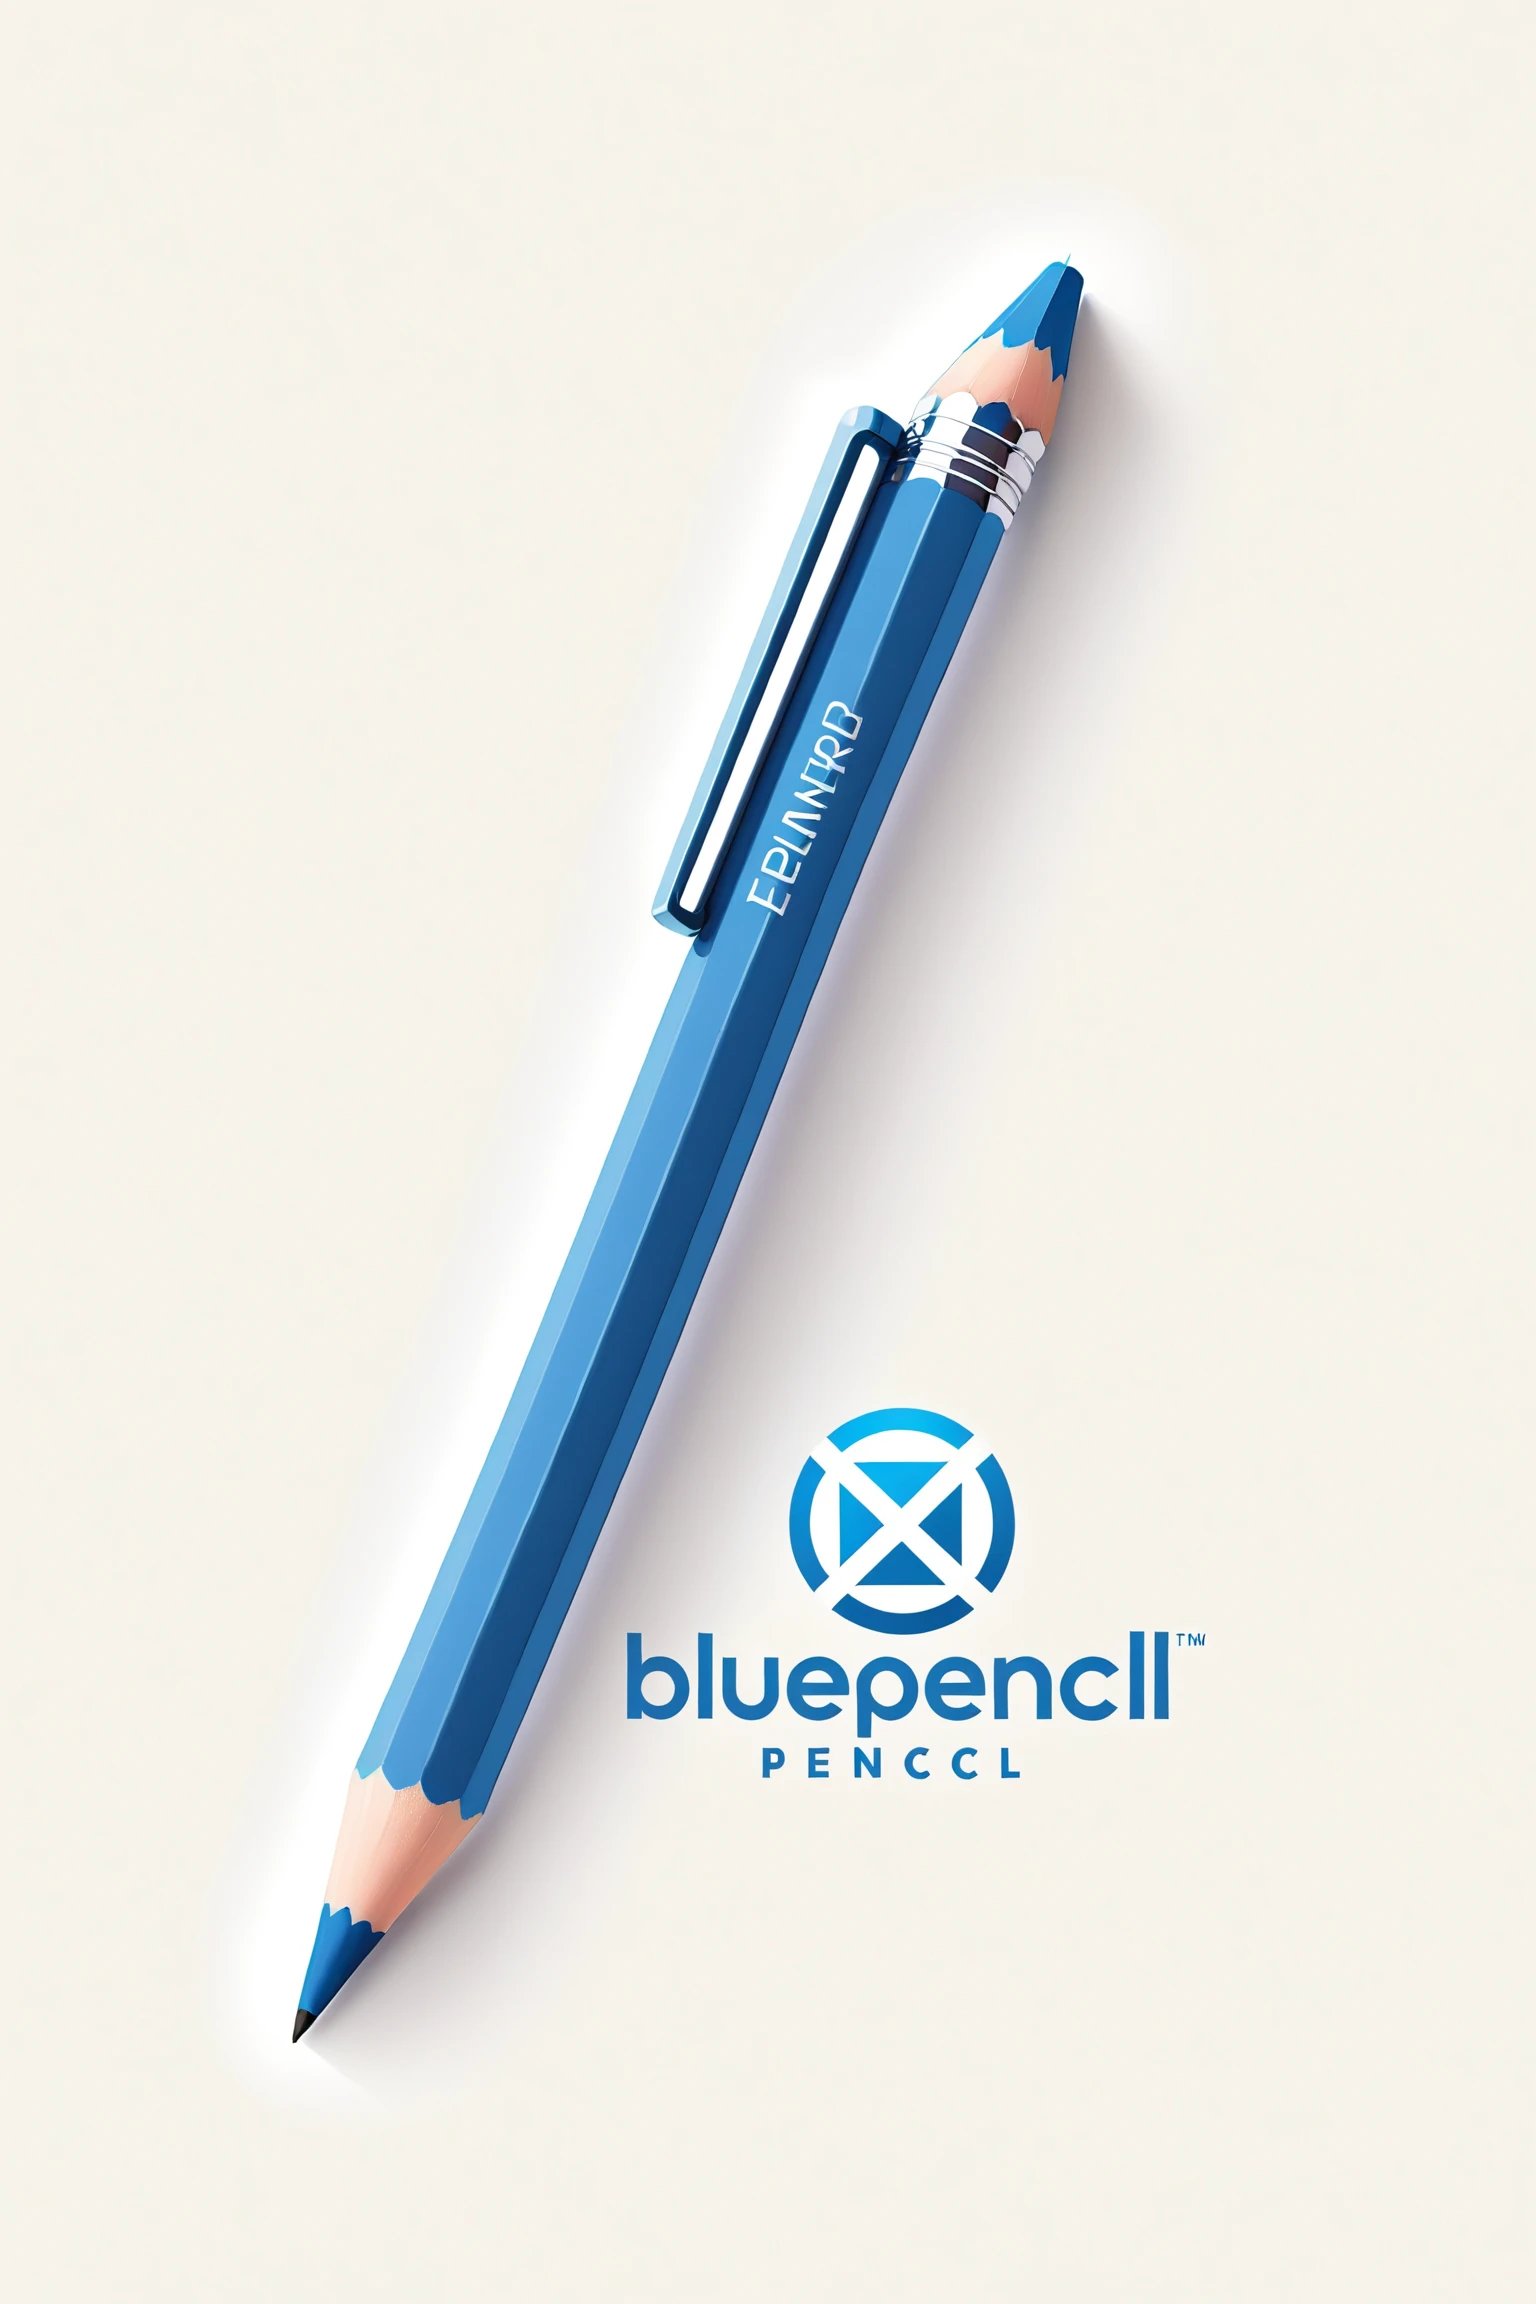 company logo, "blue_pencil" logo has a bright blue color with a sleek pencil at its center